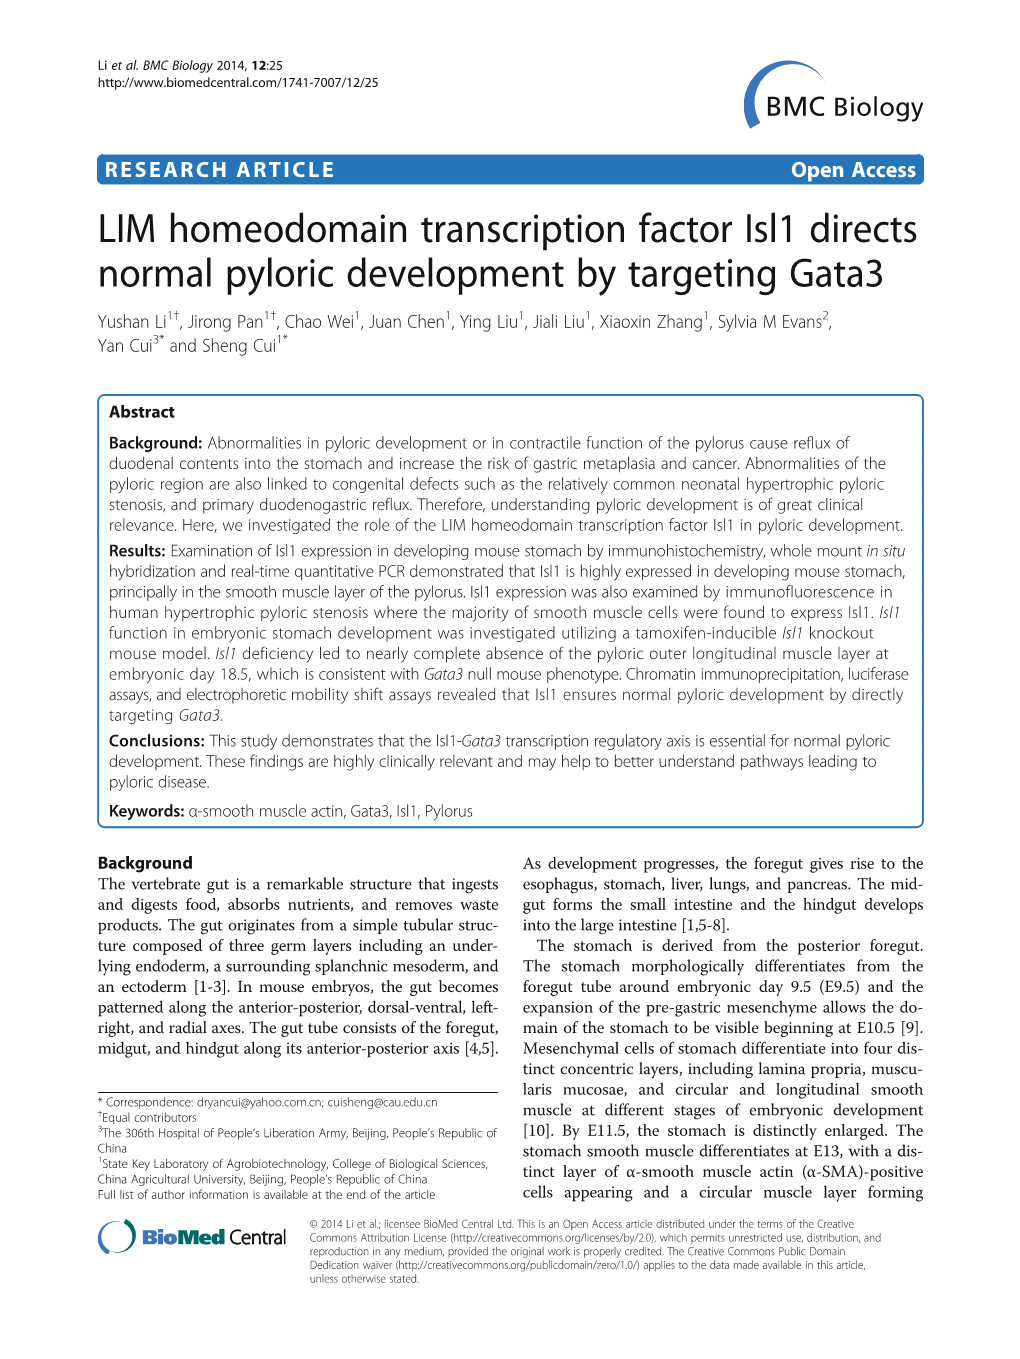 LIM Homeodomain Transcription Factor Isl1 Directs Normal Pyloric